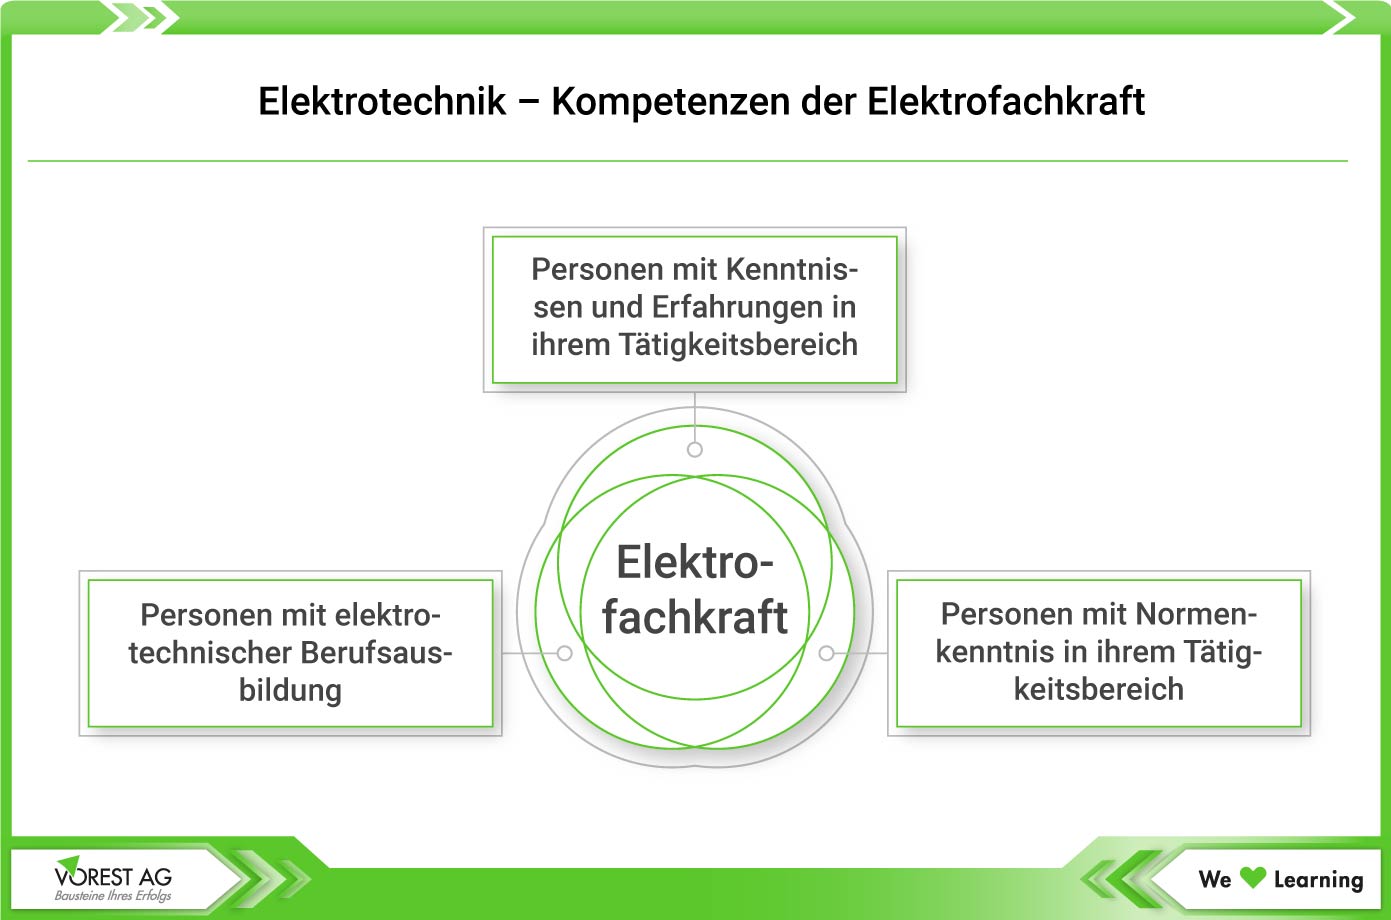 Elektrotechnik - Kompetenzen der Elektrofachkraft